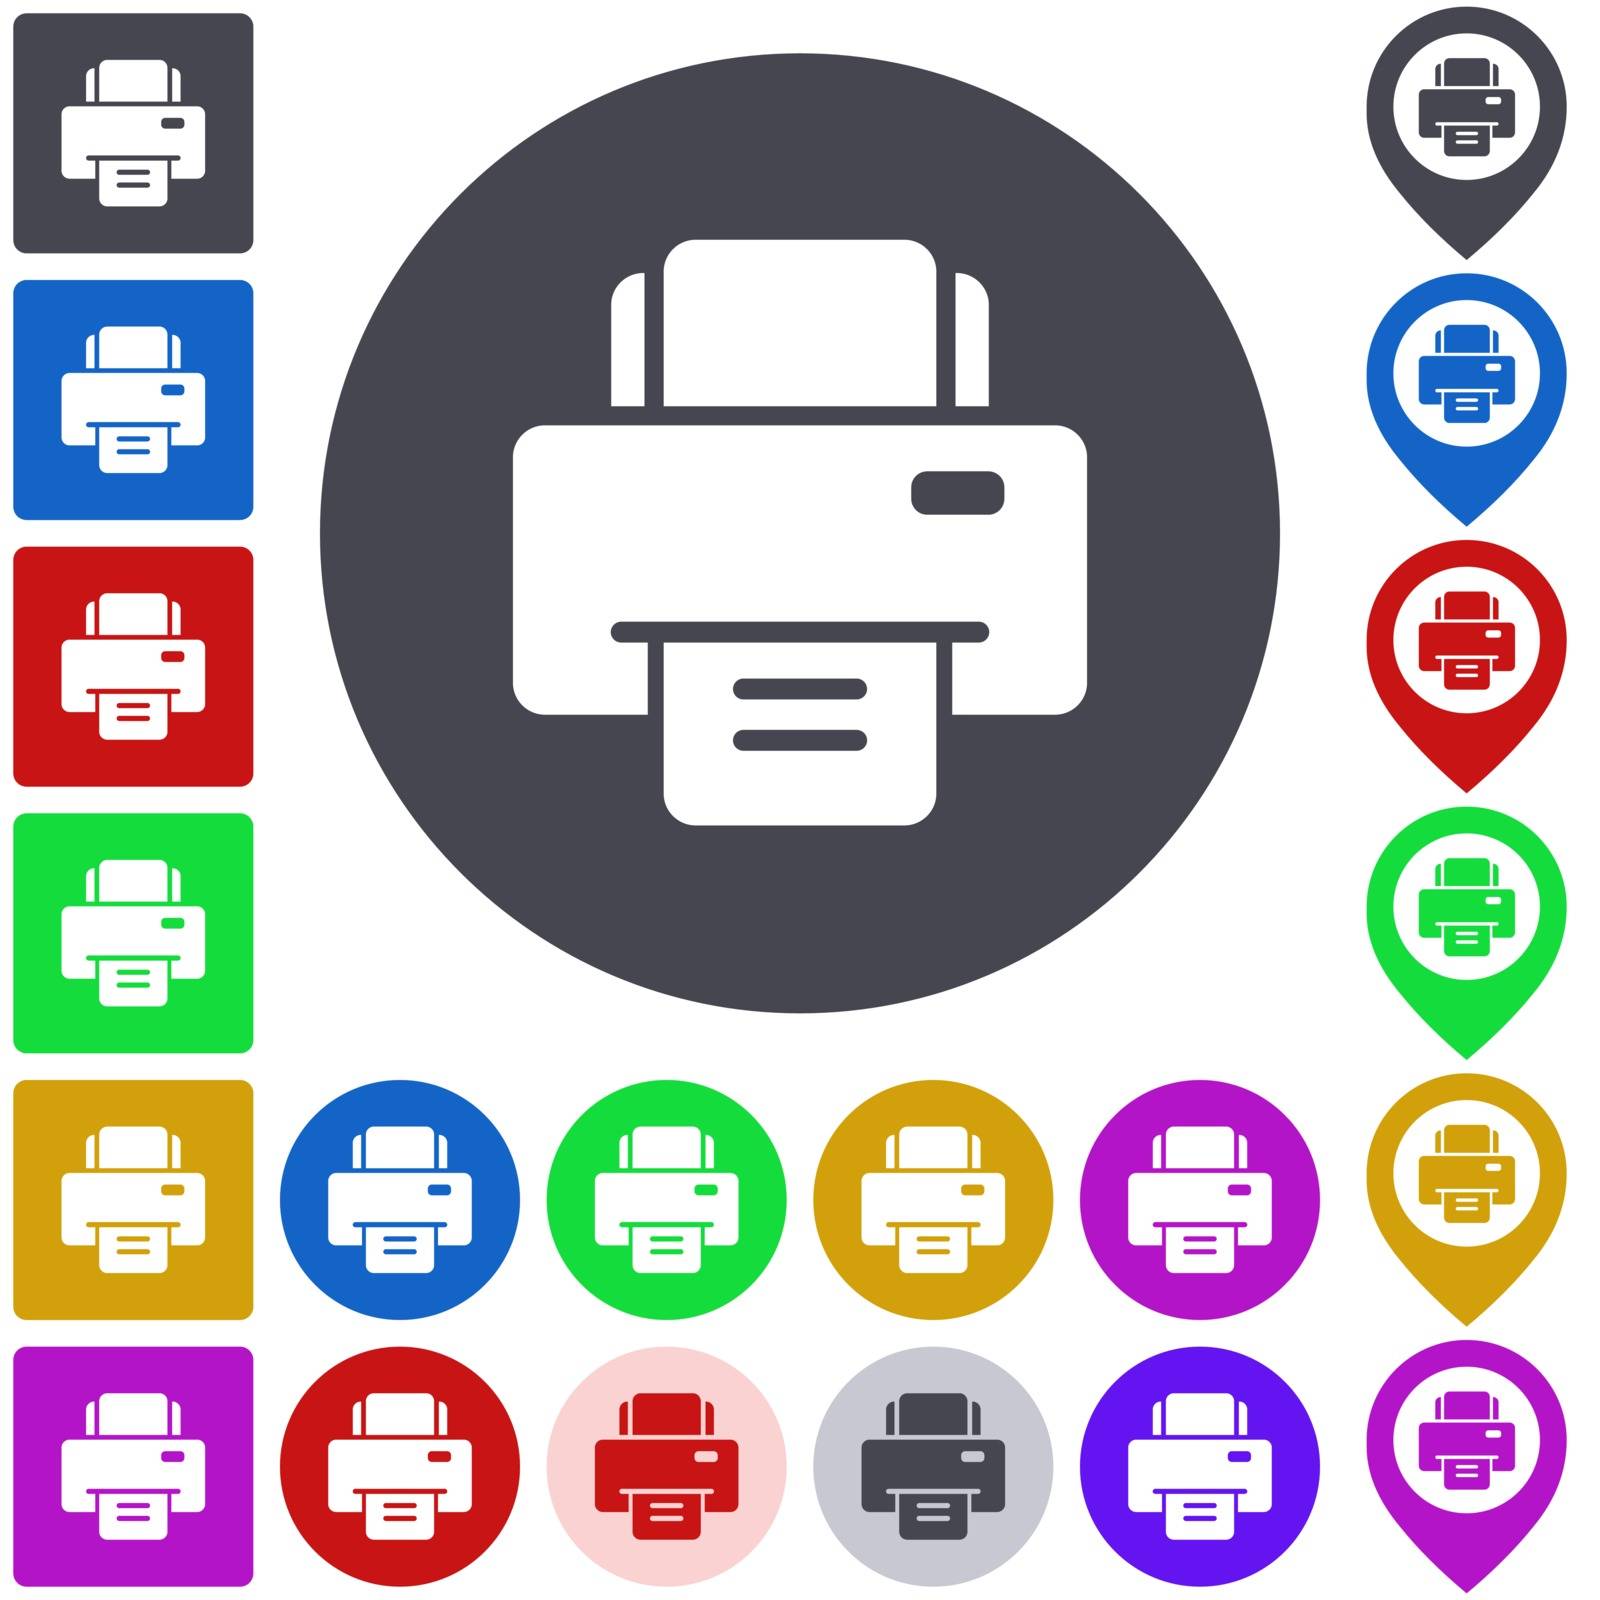 Color printer icon set. Square, circle and pin versions.